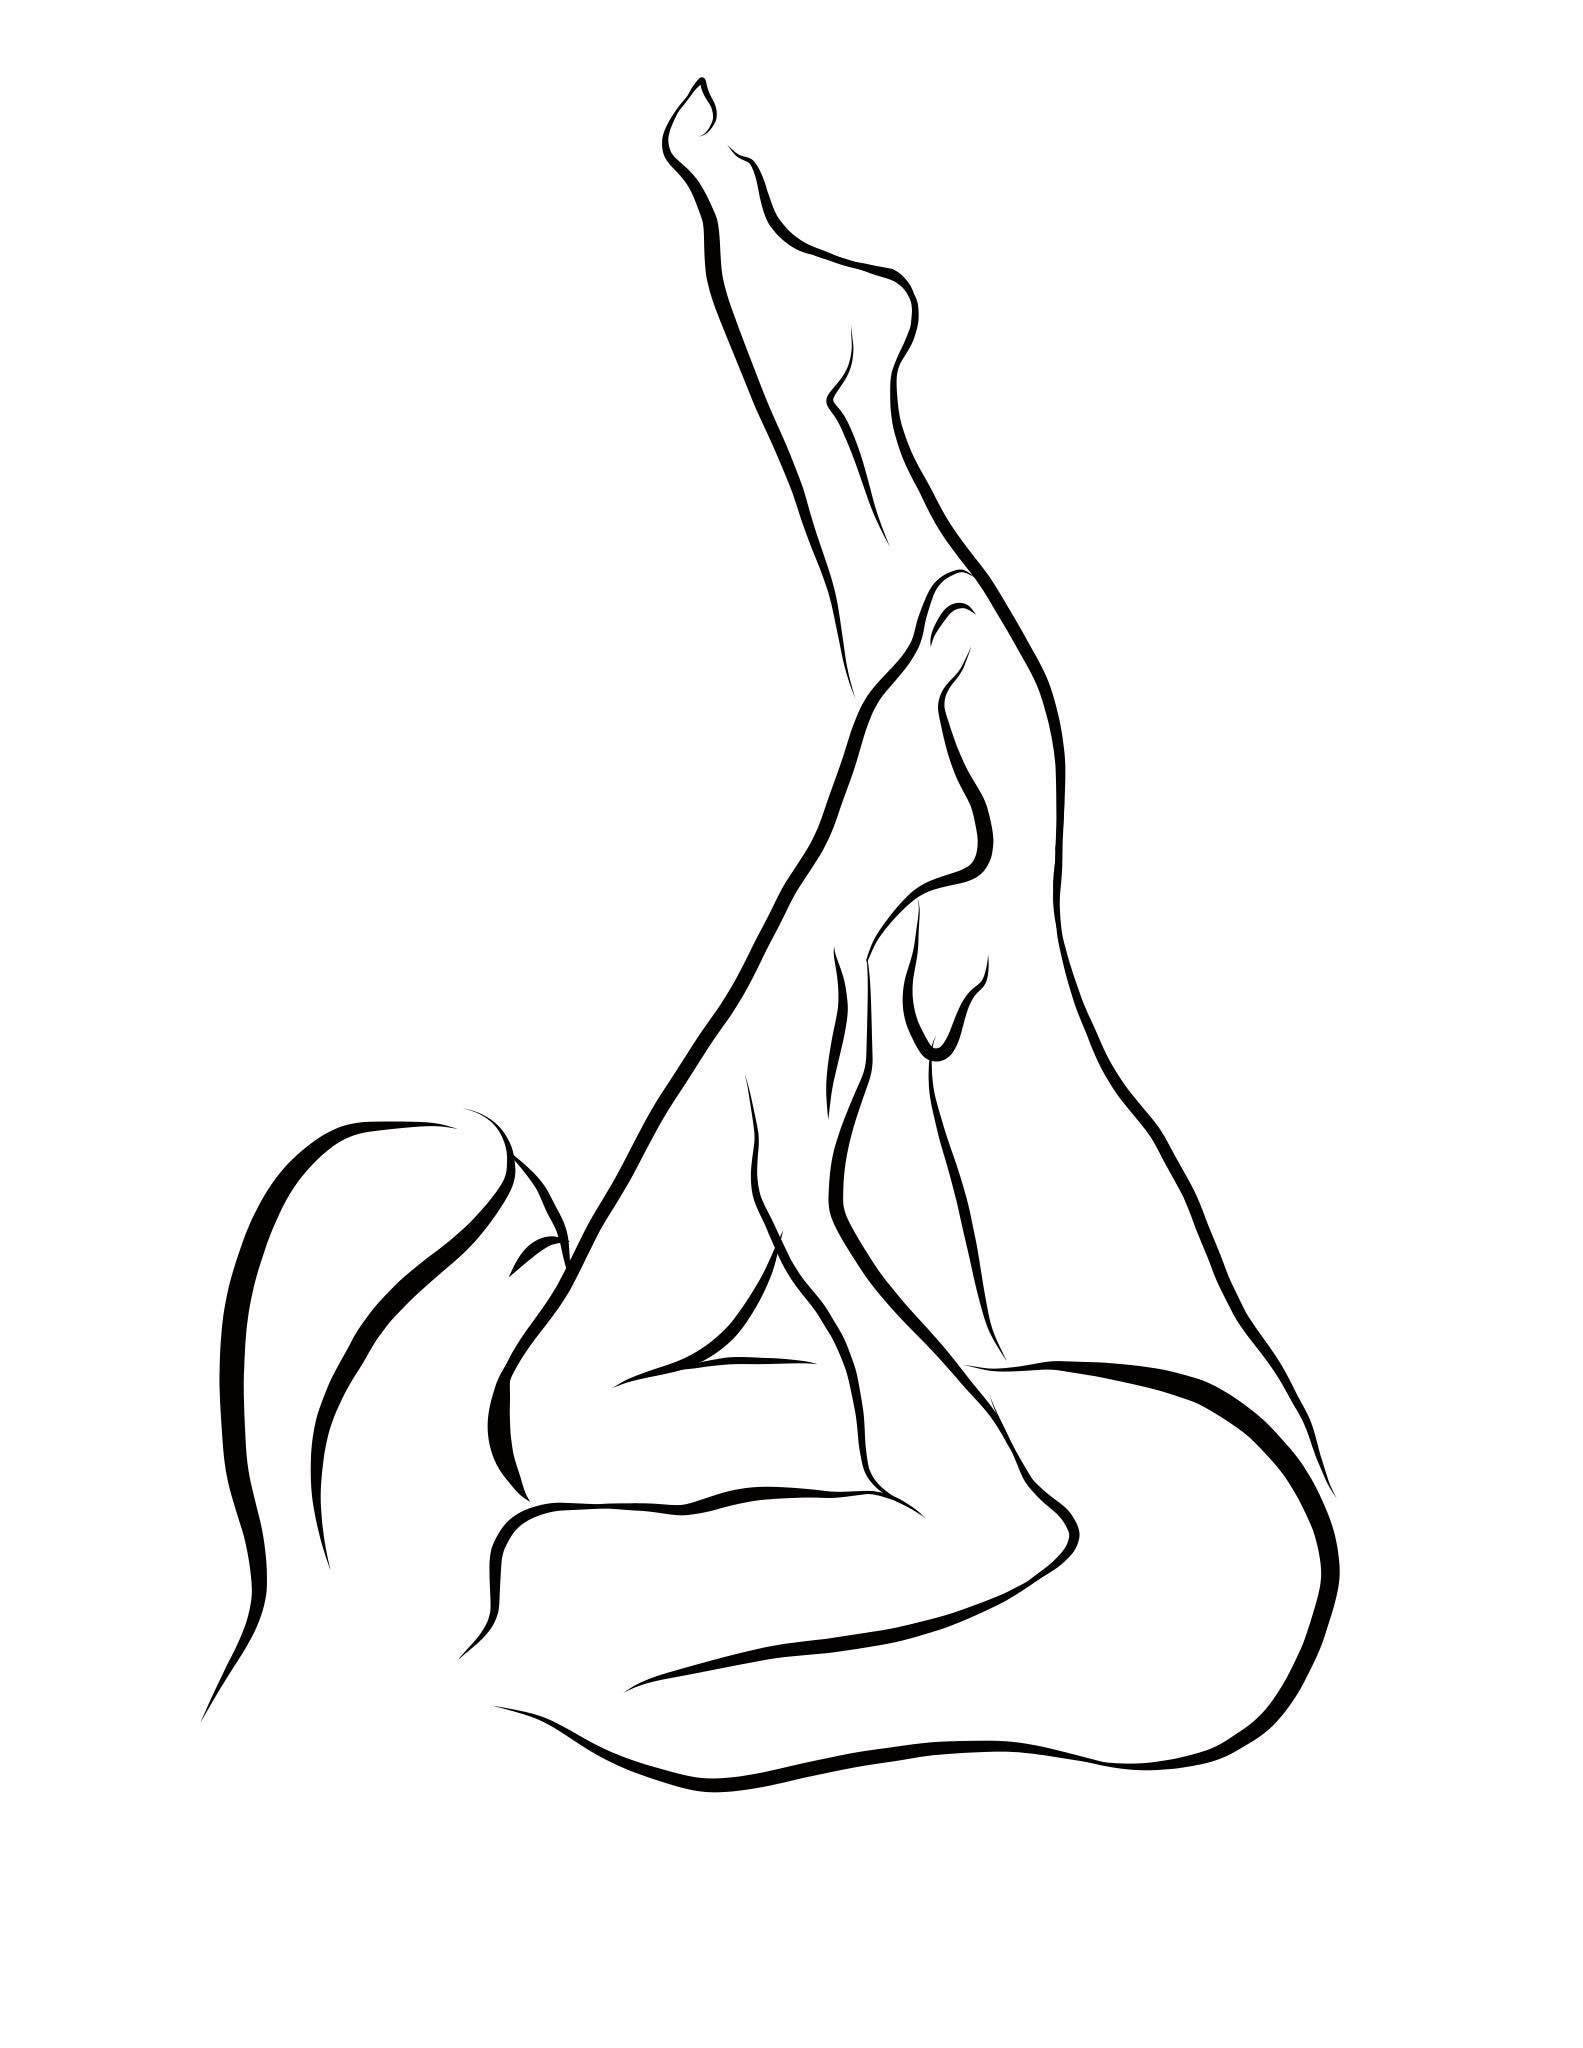 Haiku #42 - Digital Vector Drawing Female Nude Woman Figure On Back Stretching - Art by Michael Binkley